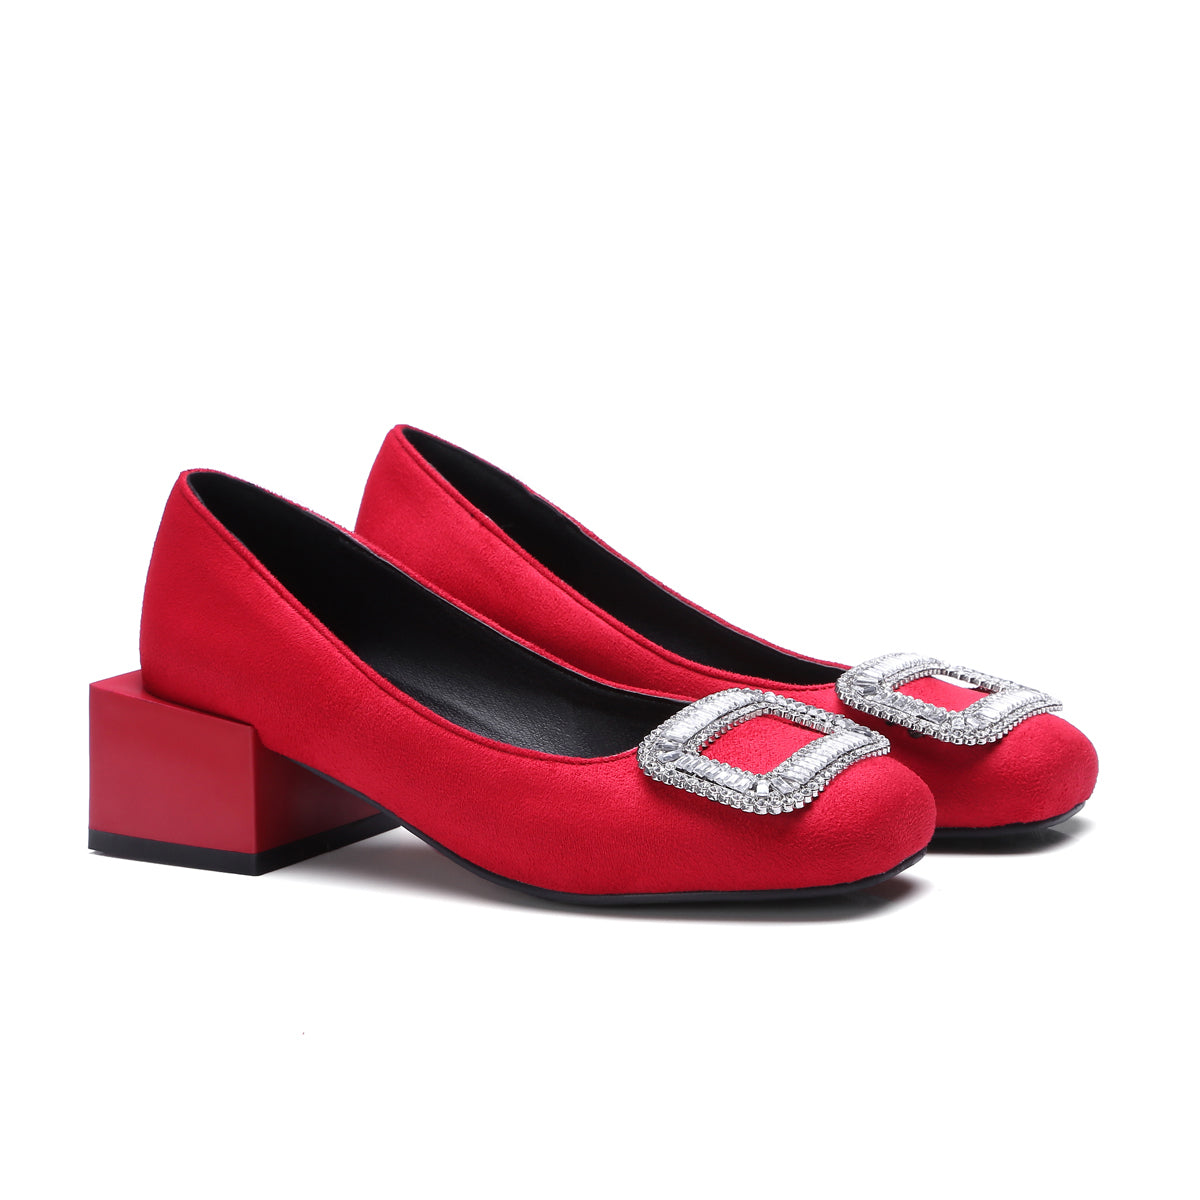 Bigsizeheels Women's square toe suede platform shoes - Red freeshipping - bigsizeheel®-size5-size15 -All Plus Sizes Available!